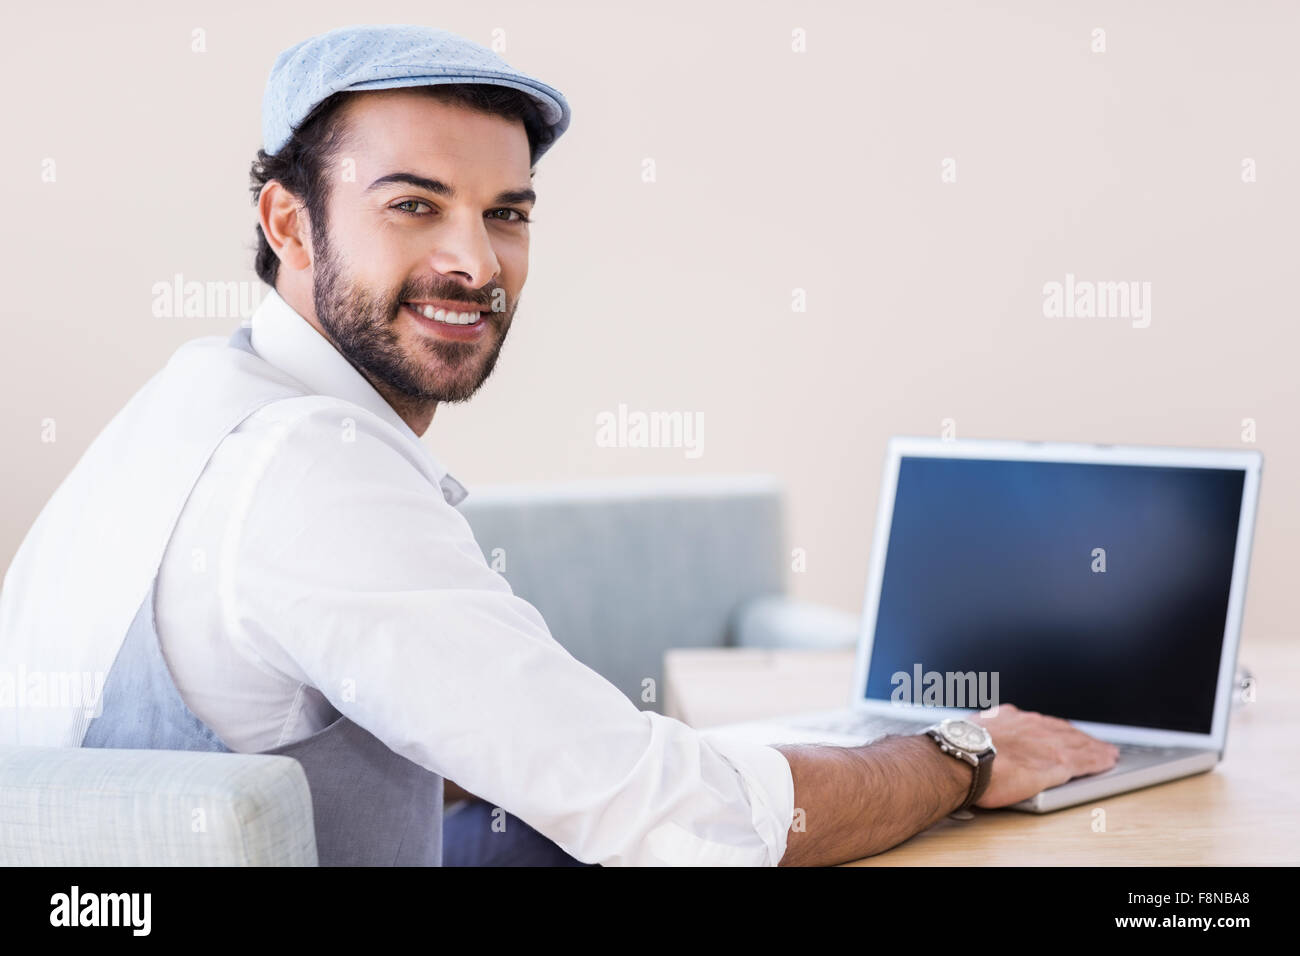 Smiling man using laptop looking back at the camera Stock Photo